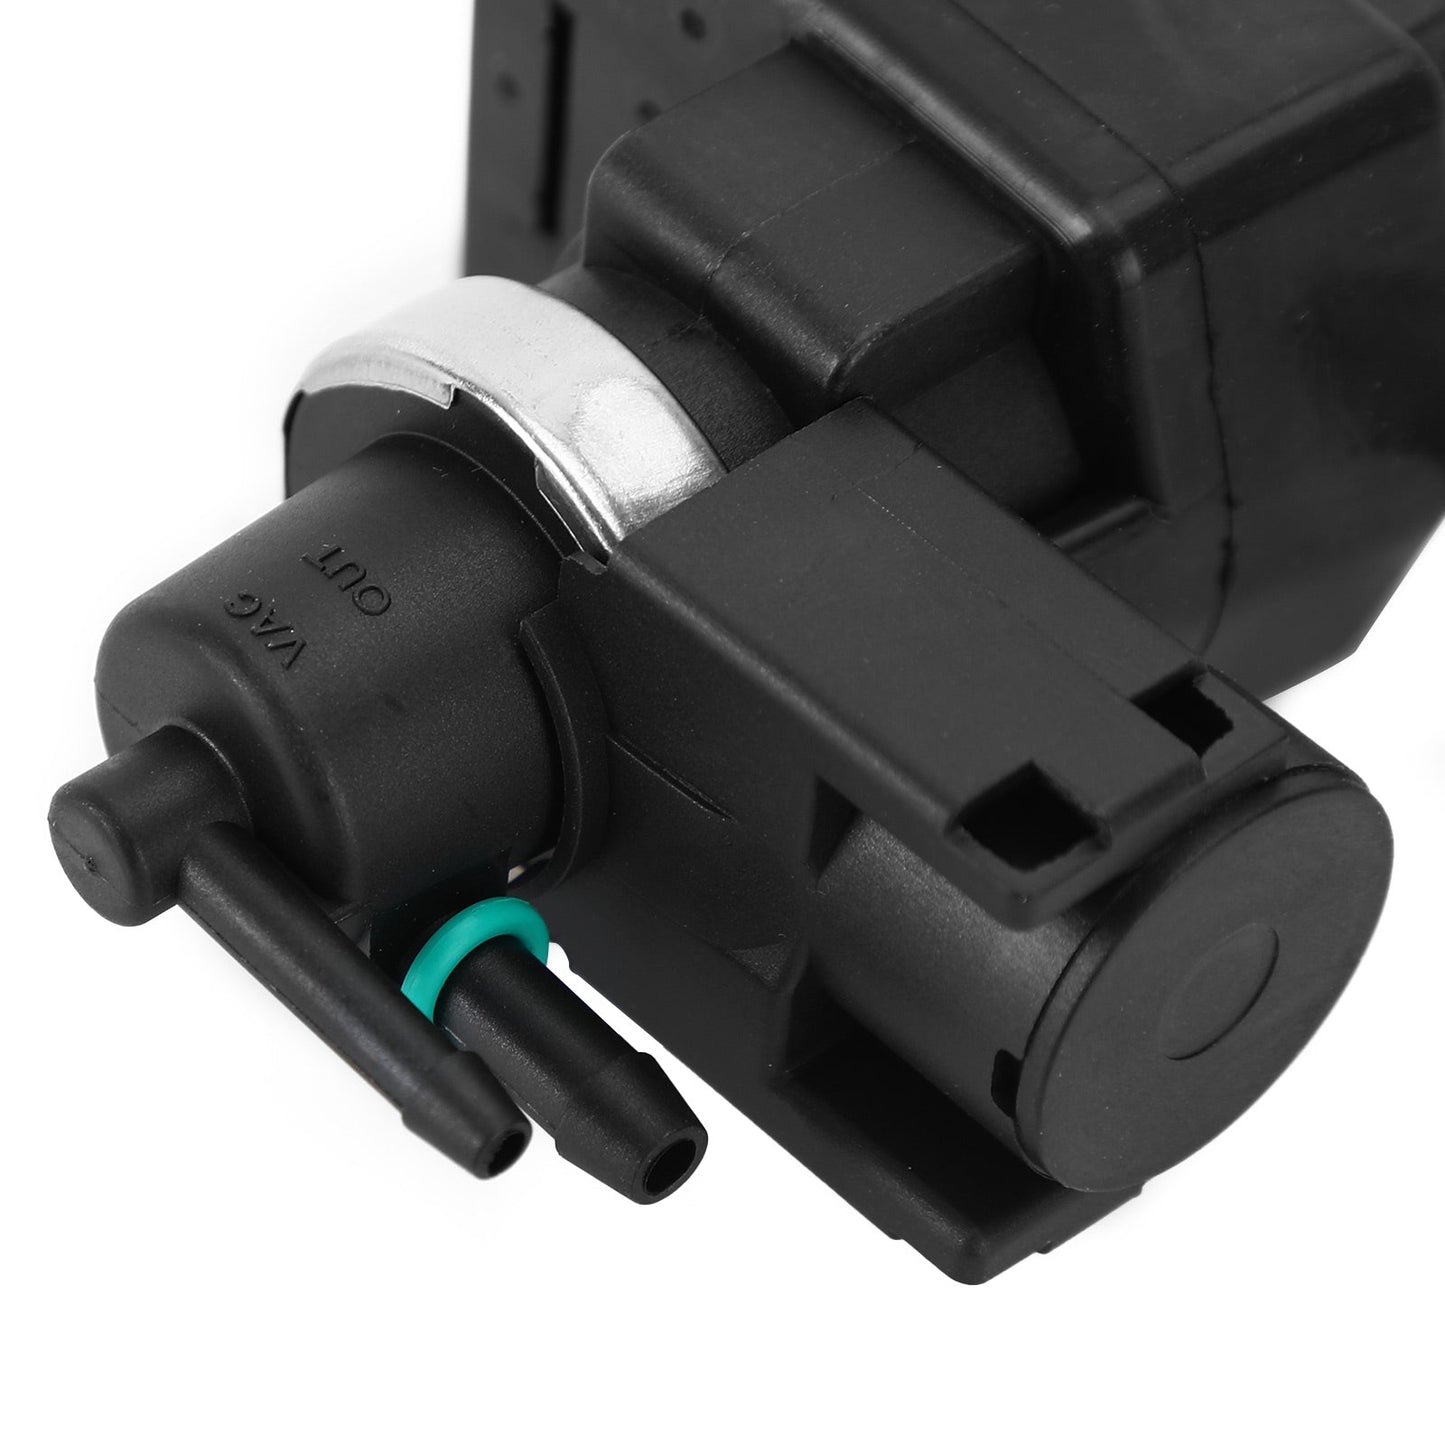 Turbolader Boost Magnetventil für Mini Cooper R56 55 57 58 59 60 11657599547